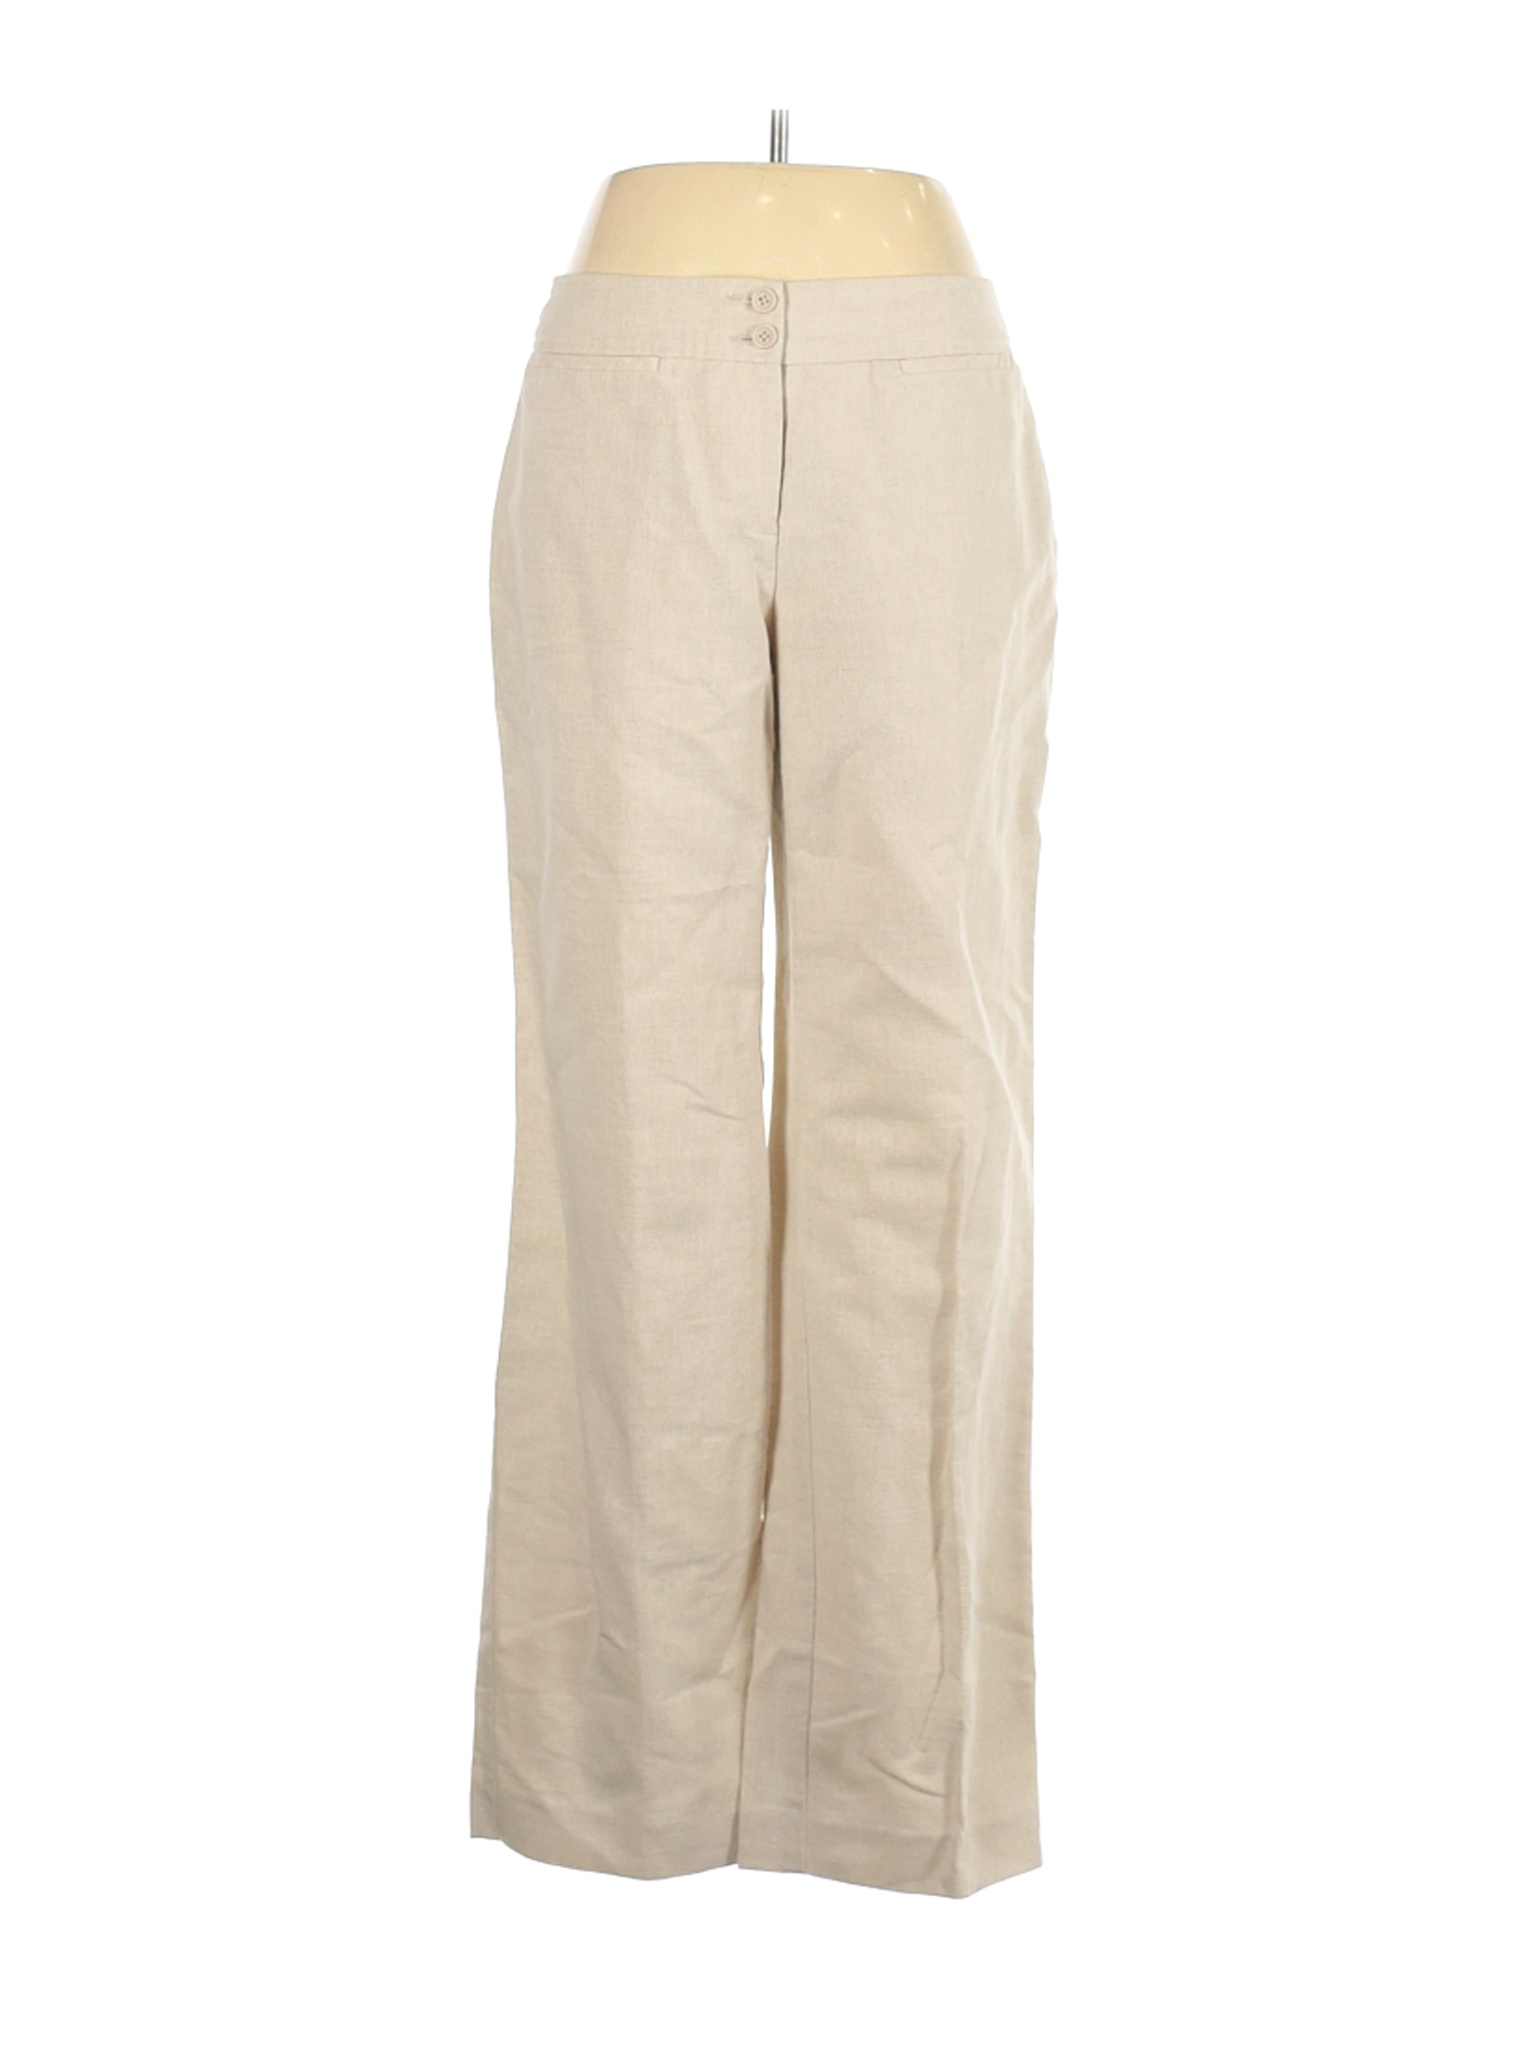 Liz Claiborne Women Brown Linen Pants 10 | eBay